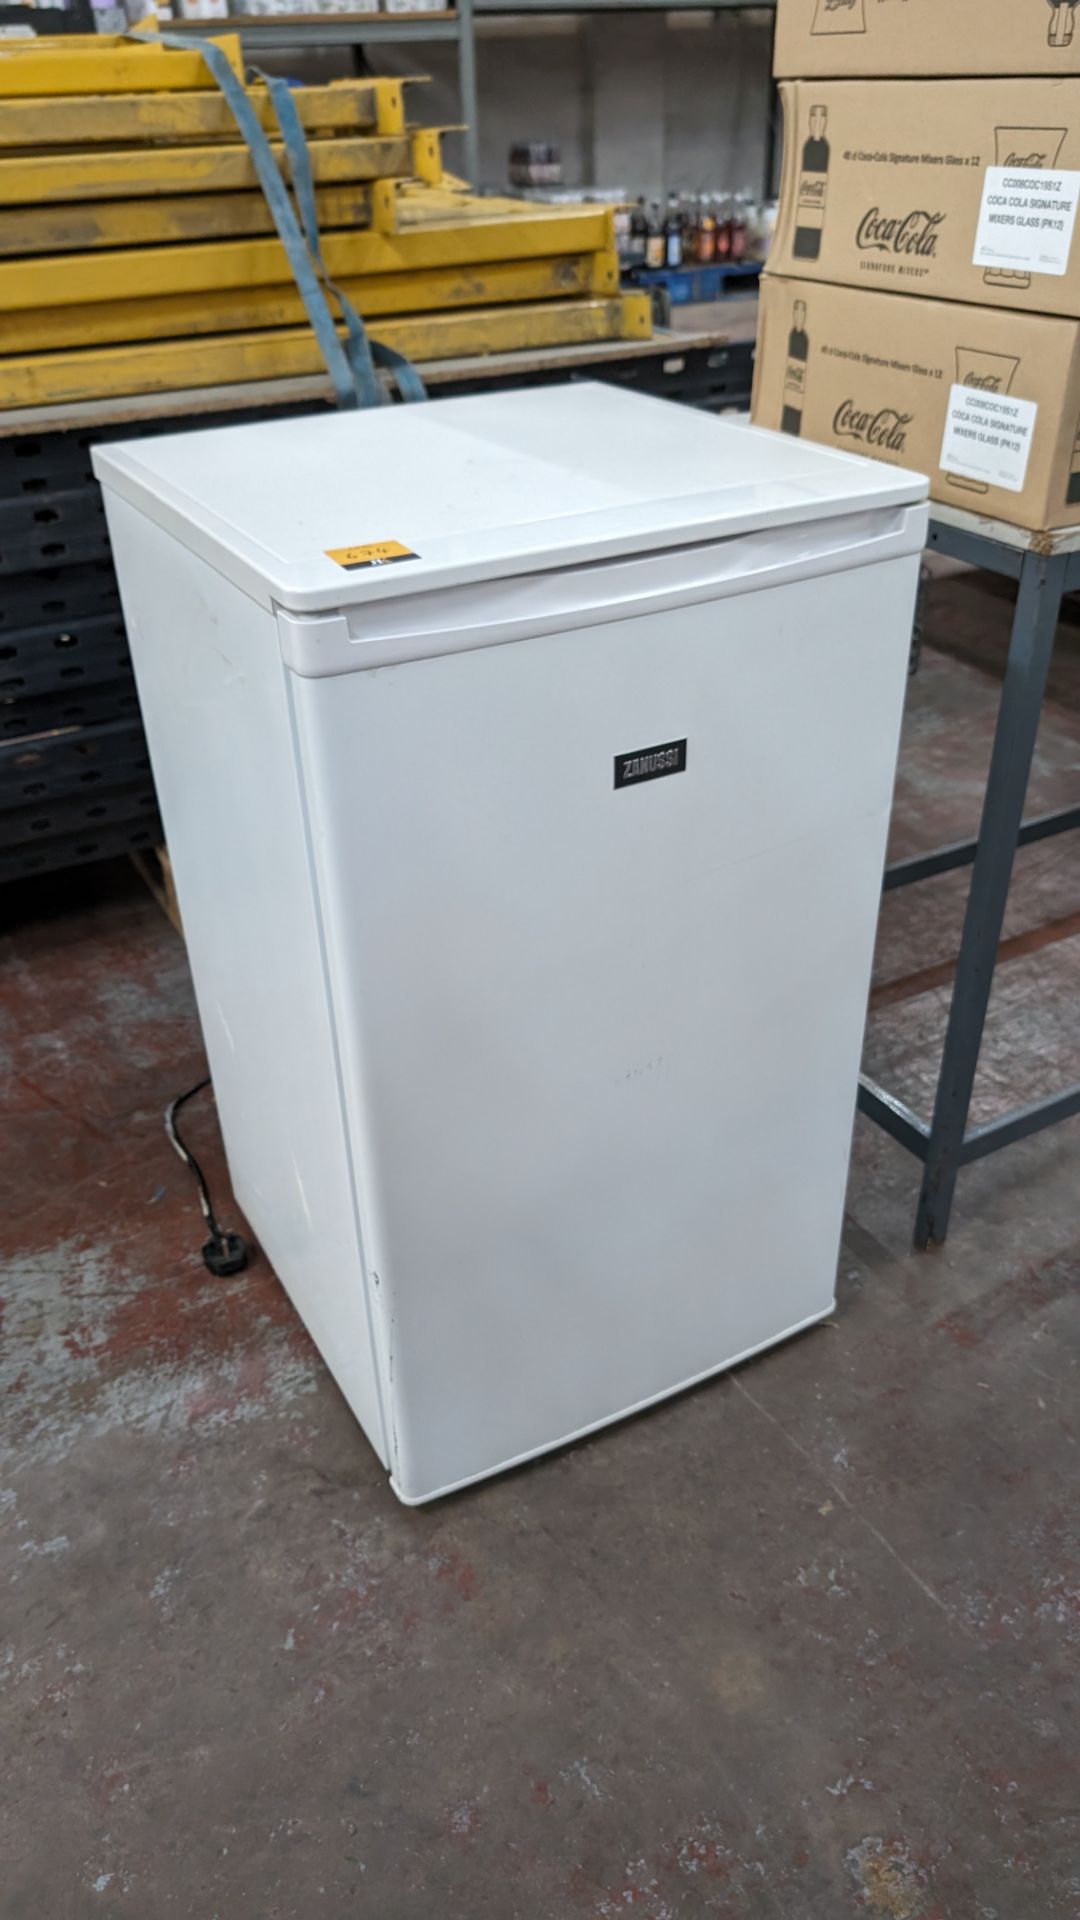 Zanussi undercounter domestic freezer - Image 2 of 4